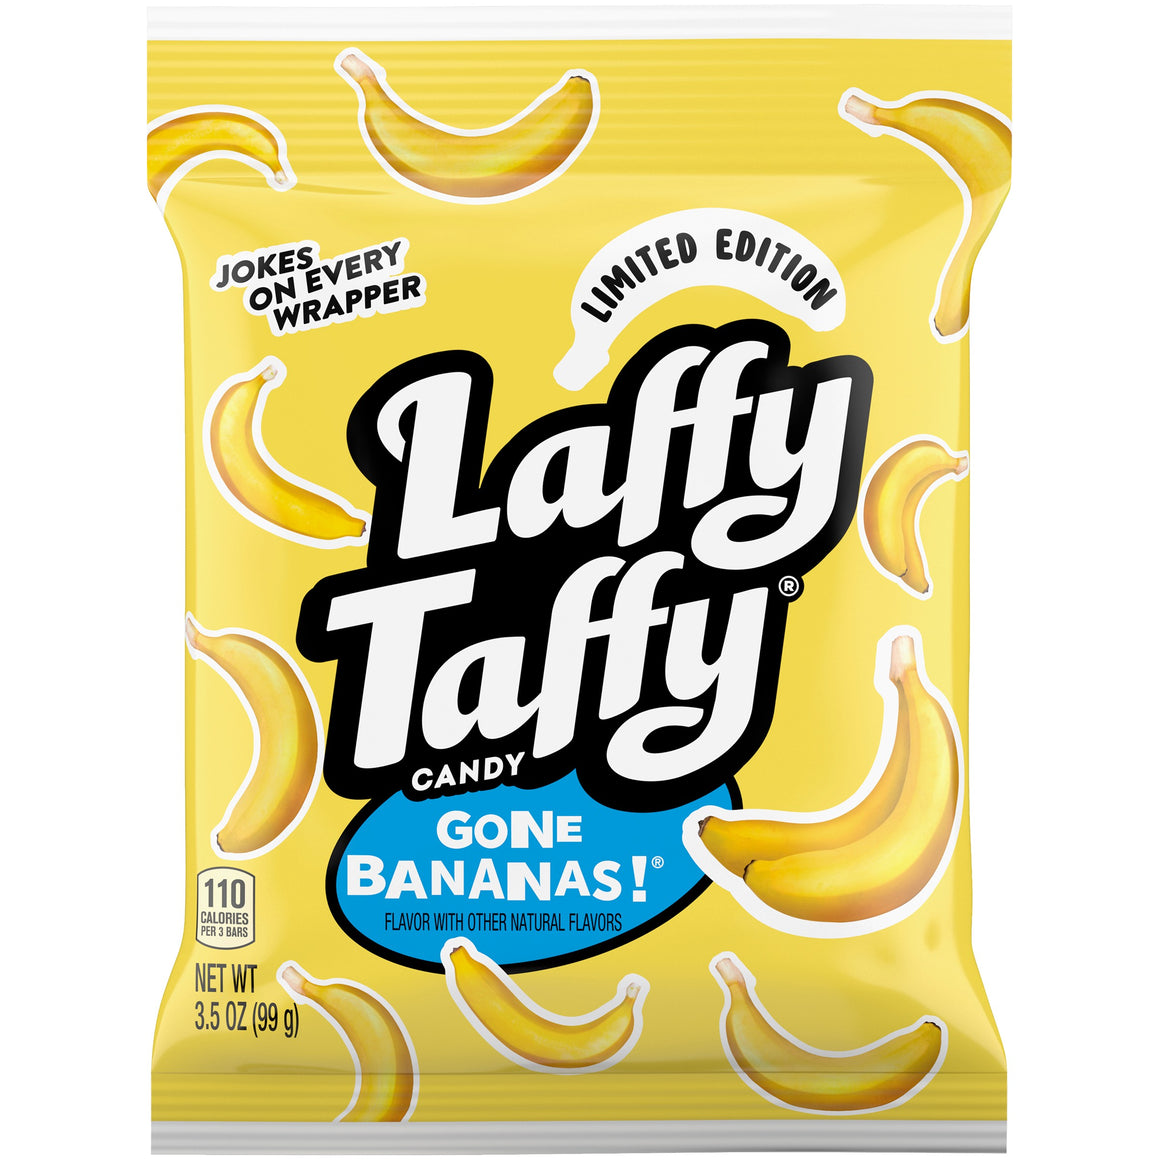 All City Candy Laffy Taffy Gone Bananas 3.5 oz. Bag Taffy Ferrara Candy Company For fresh candy and great service, visit www.allcitycandy.com